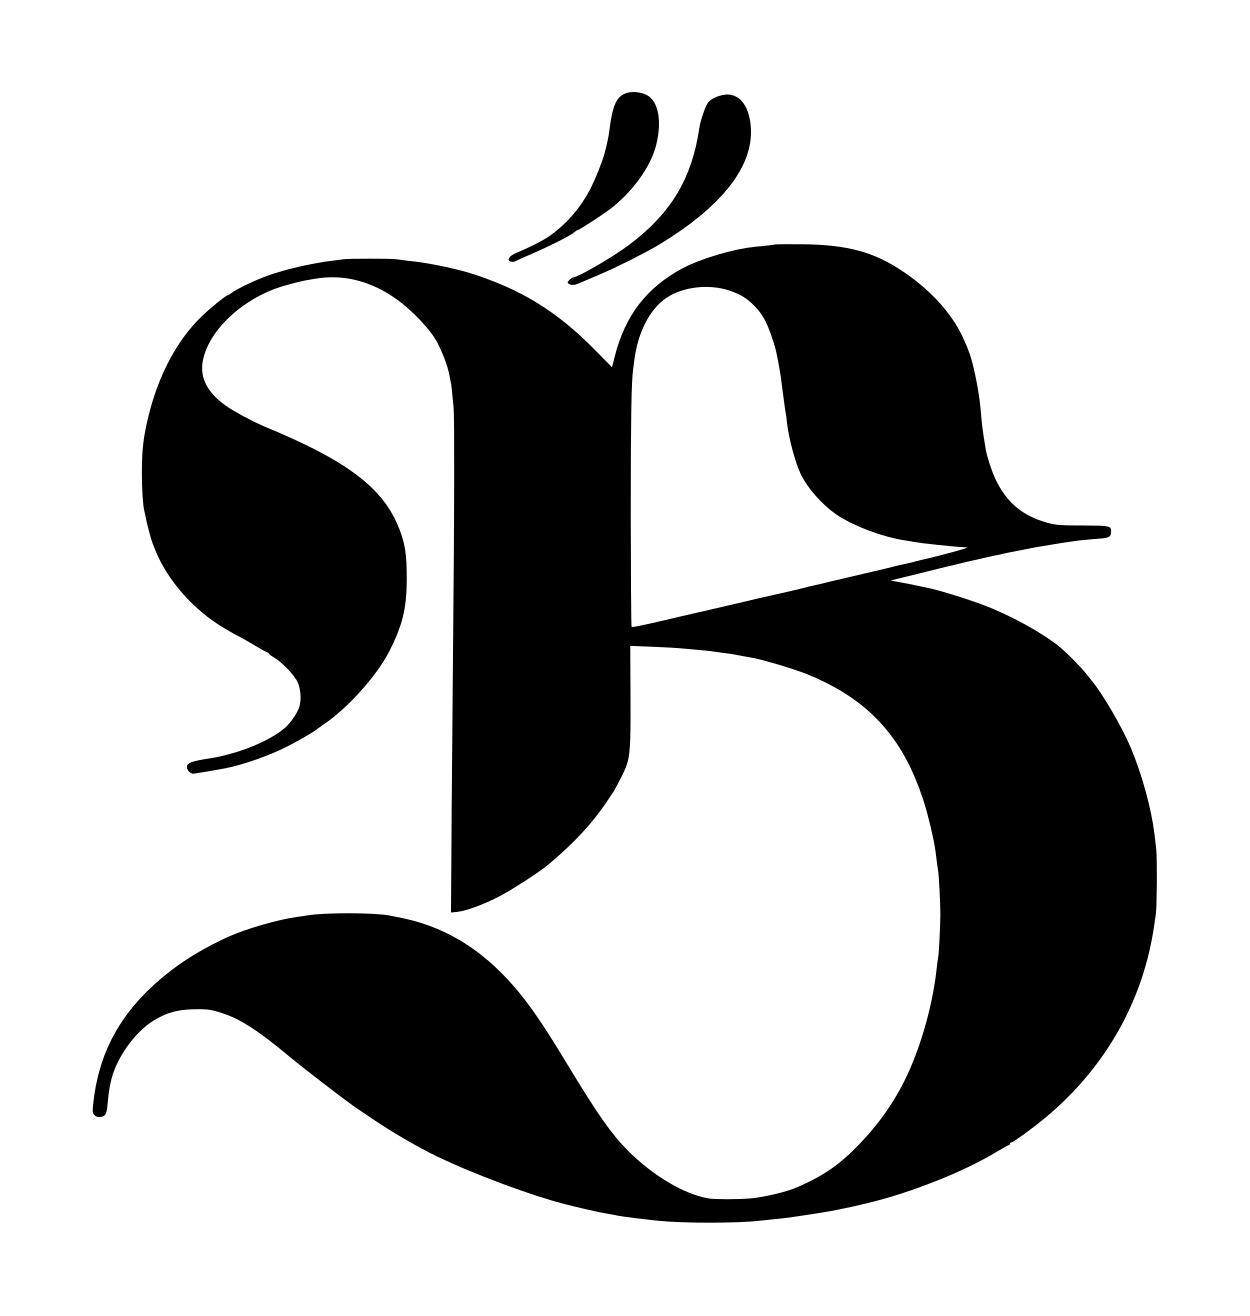 b letter file logo svg wikimedia commons #34944